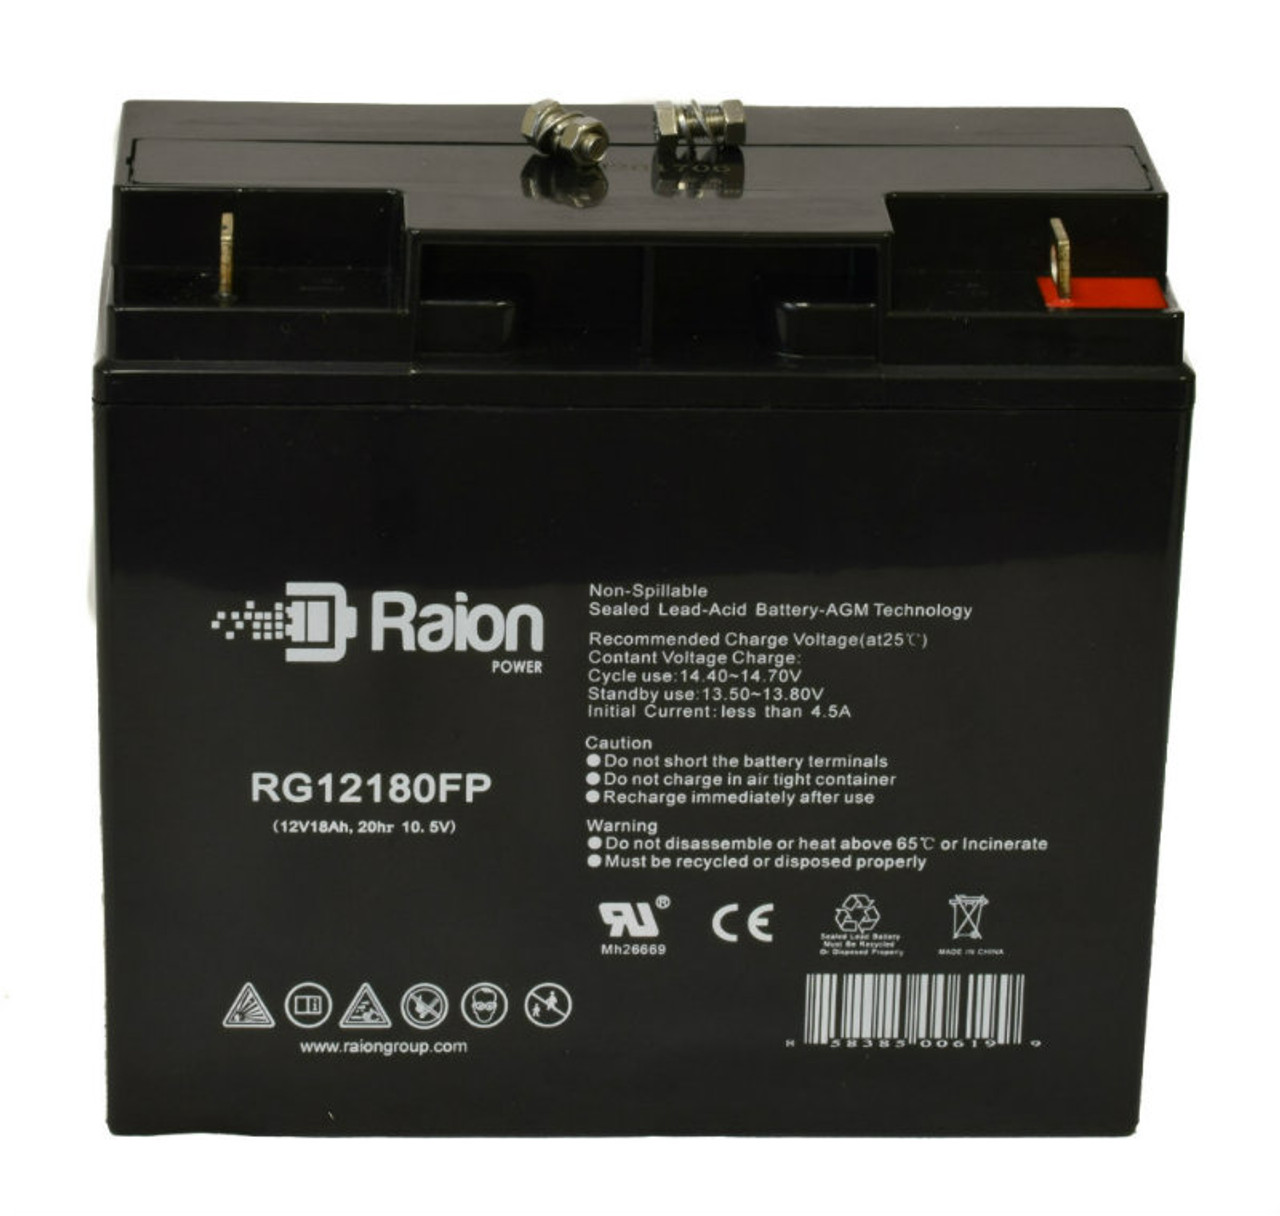 Raion Power RG12180FP 12V 18Ah Lead Acid Battery for Sonnenschein DF25